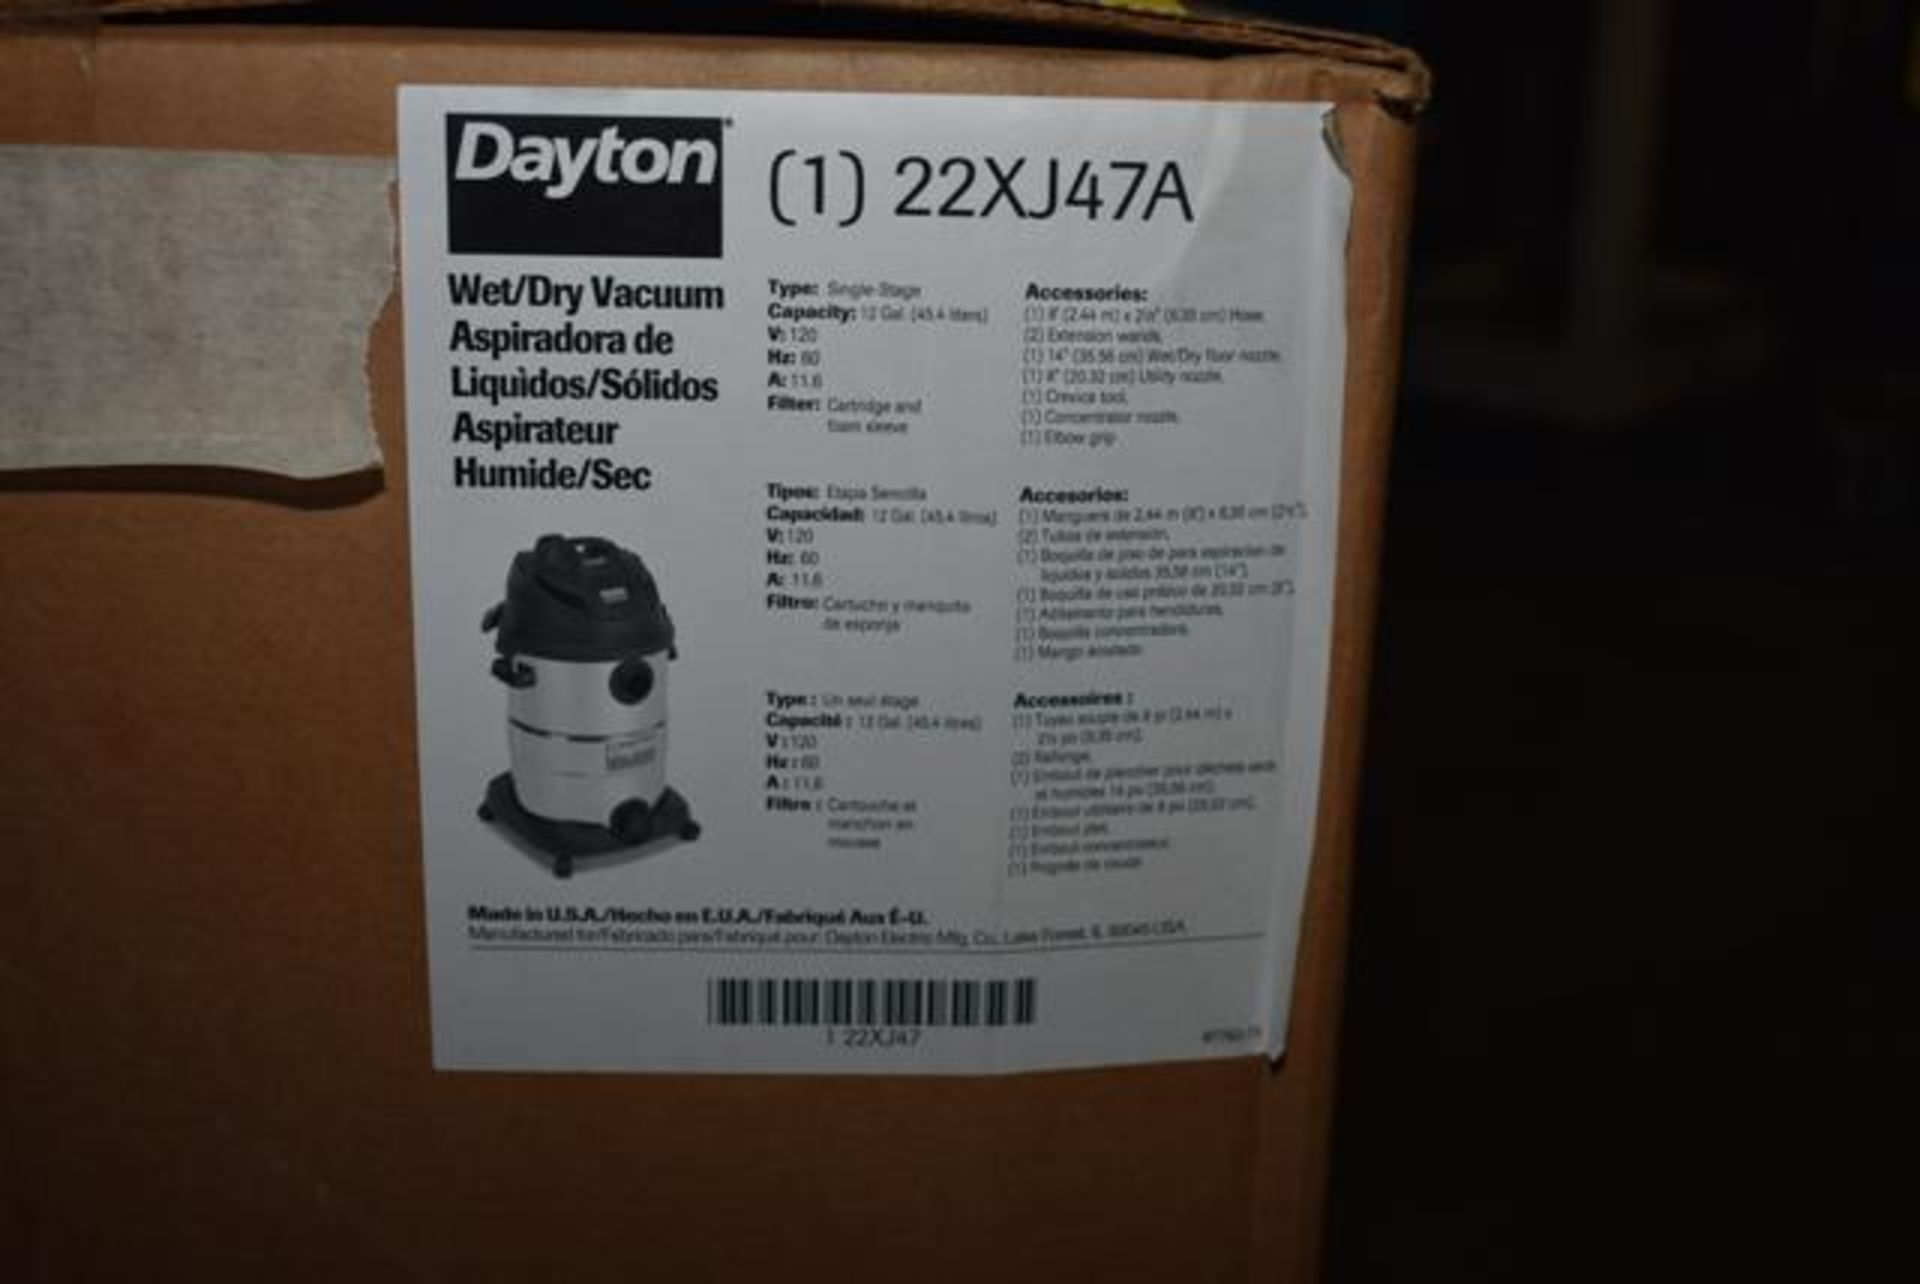 Dayton Model #22XJ47A, Wet/Dry Vacuum, RIGGING FEE: $35 - Image 2 of 2